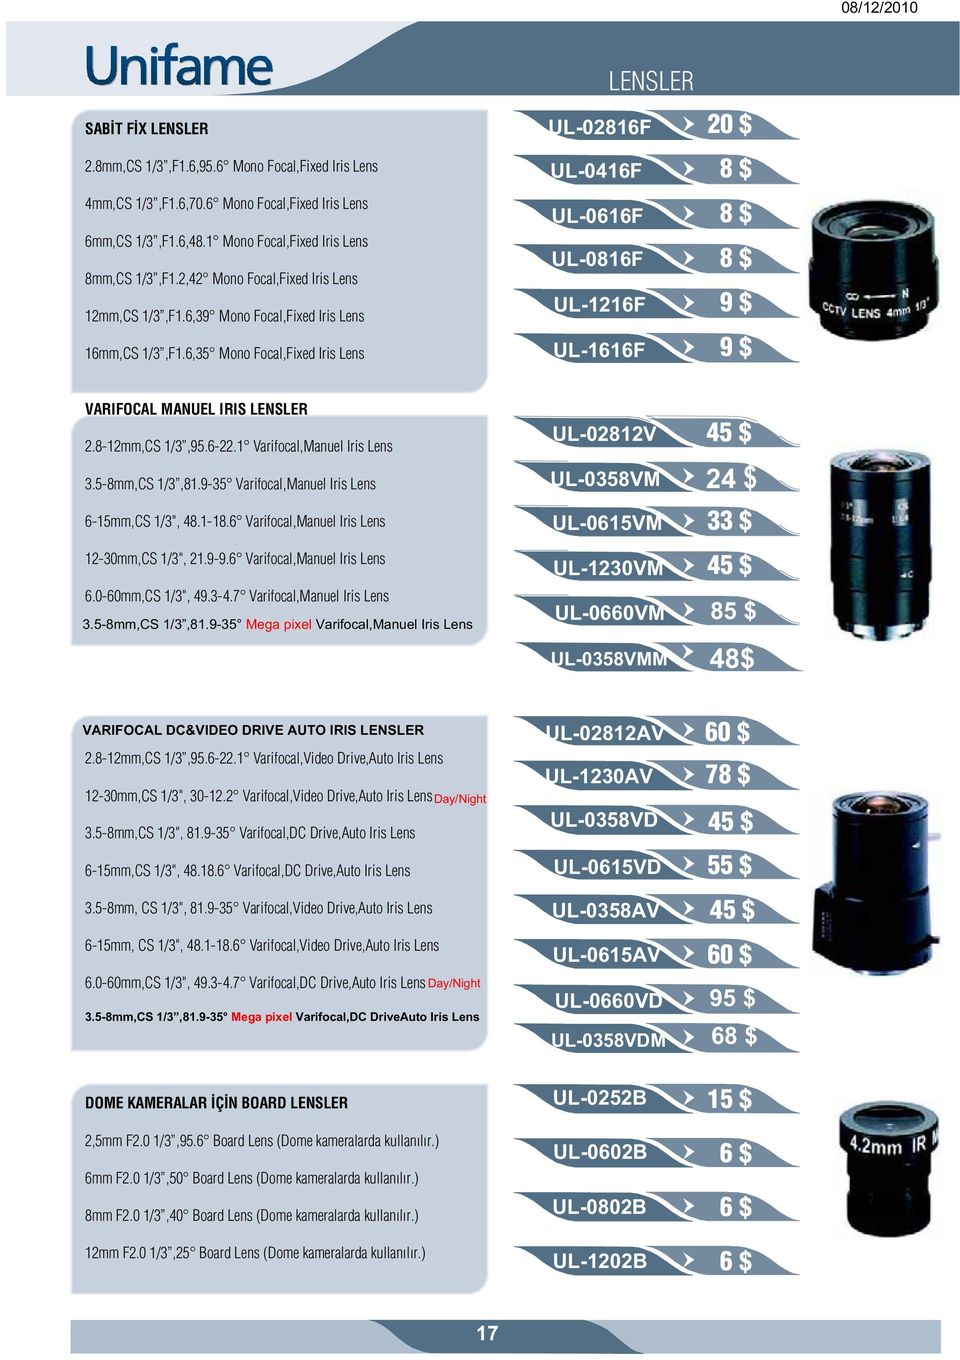 6,35 Mono Focal,Fixed Iris Lens LENSLER UL-02816F UL-0416F UL-0616F UL-0816F UL-1216F UL-1616F 20 $ 8 $ 8 $ 8 $ 9 $ 9 $ VARIFOCAL MANUEL IRIS LENSLER 2.8-12mm,CS 1/3,95.6-22.